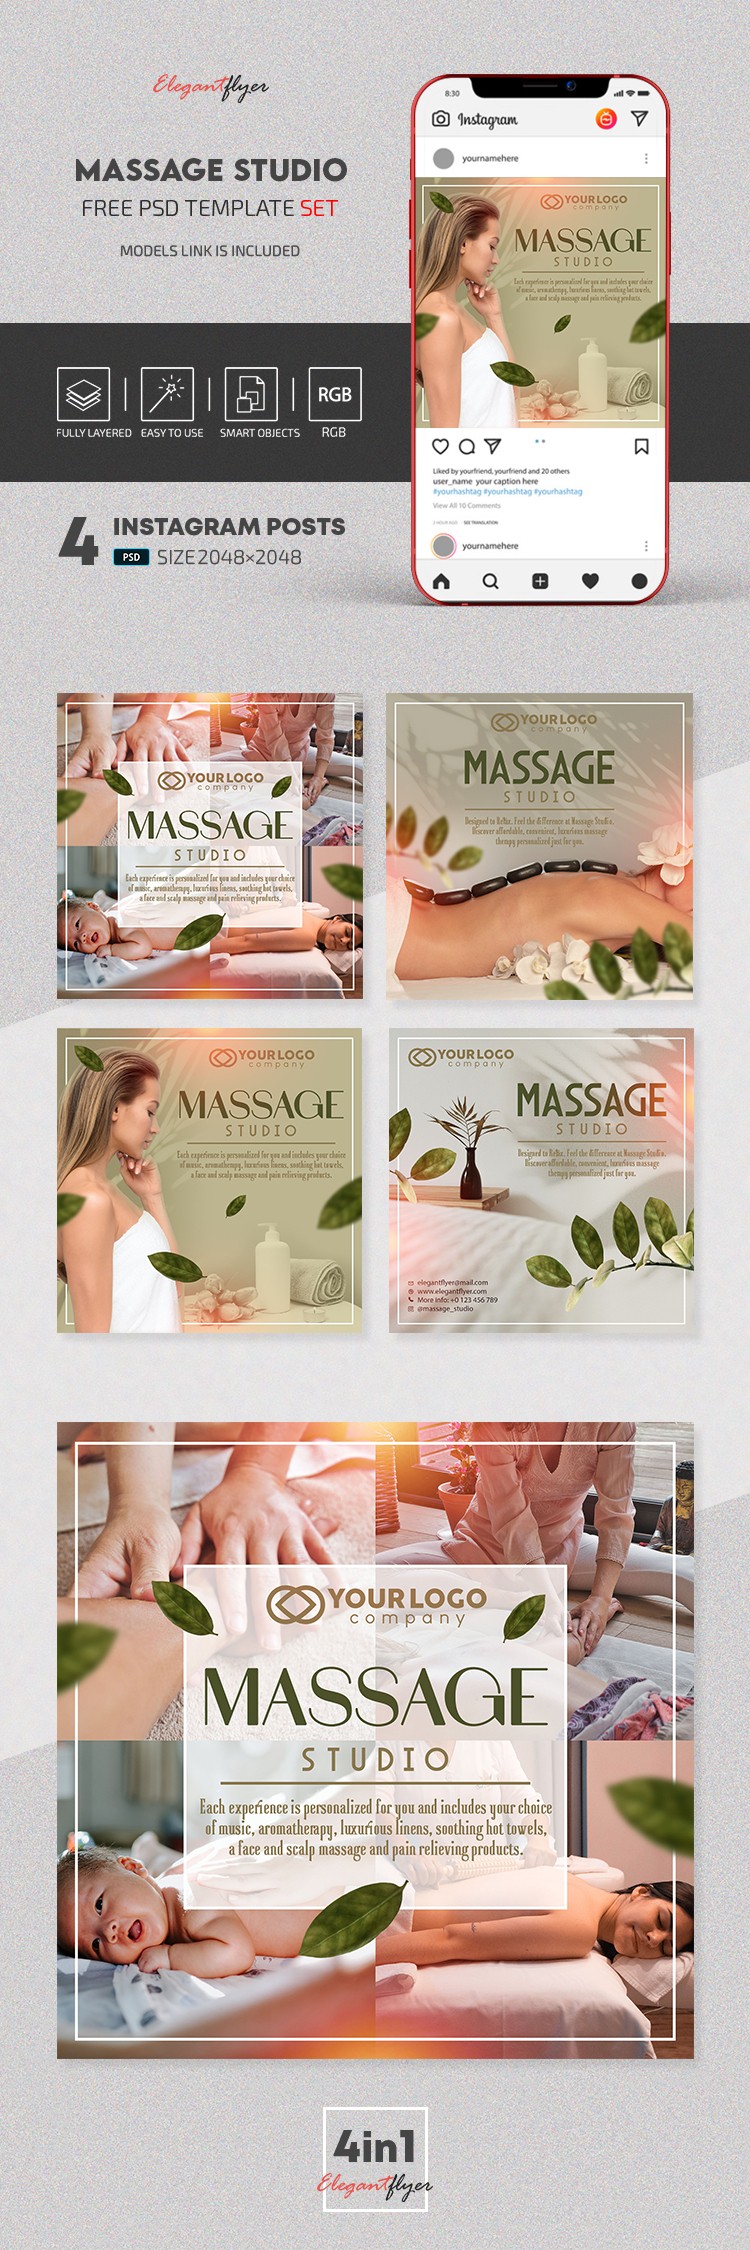 Studio di Massaggio Instagram by ElegantFlyer